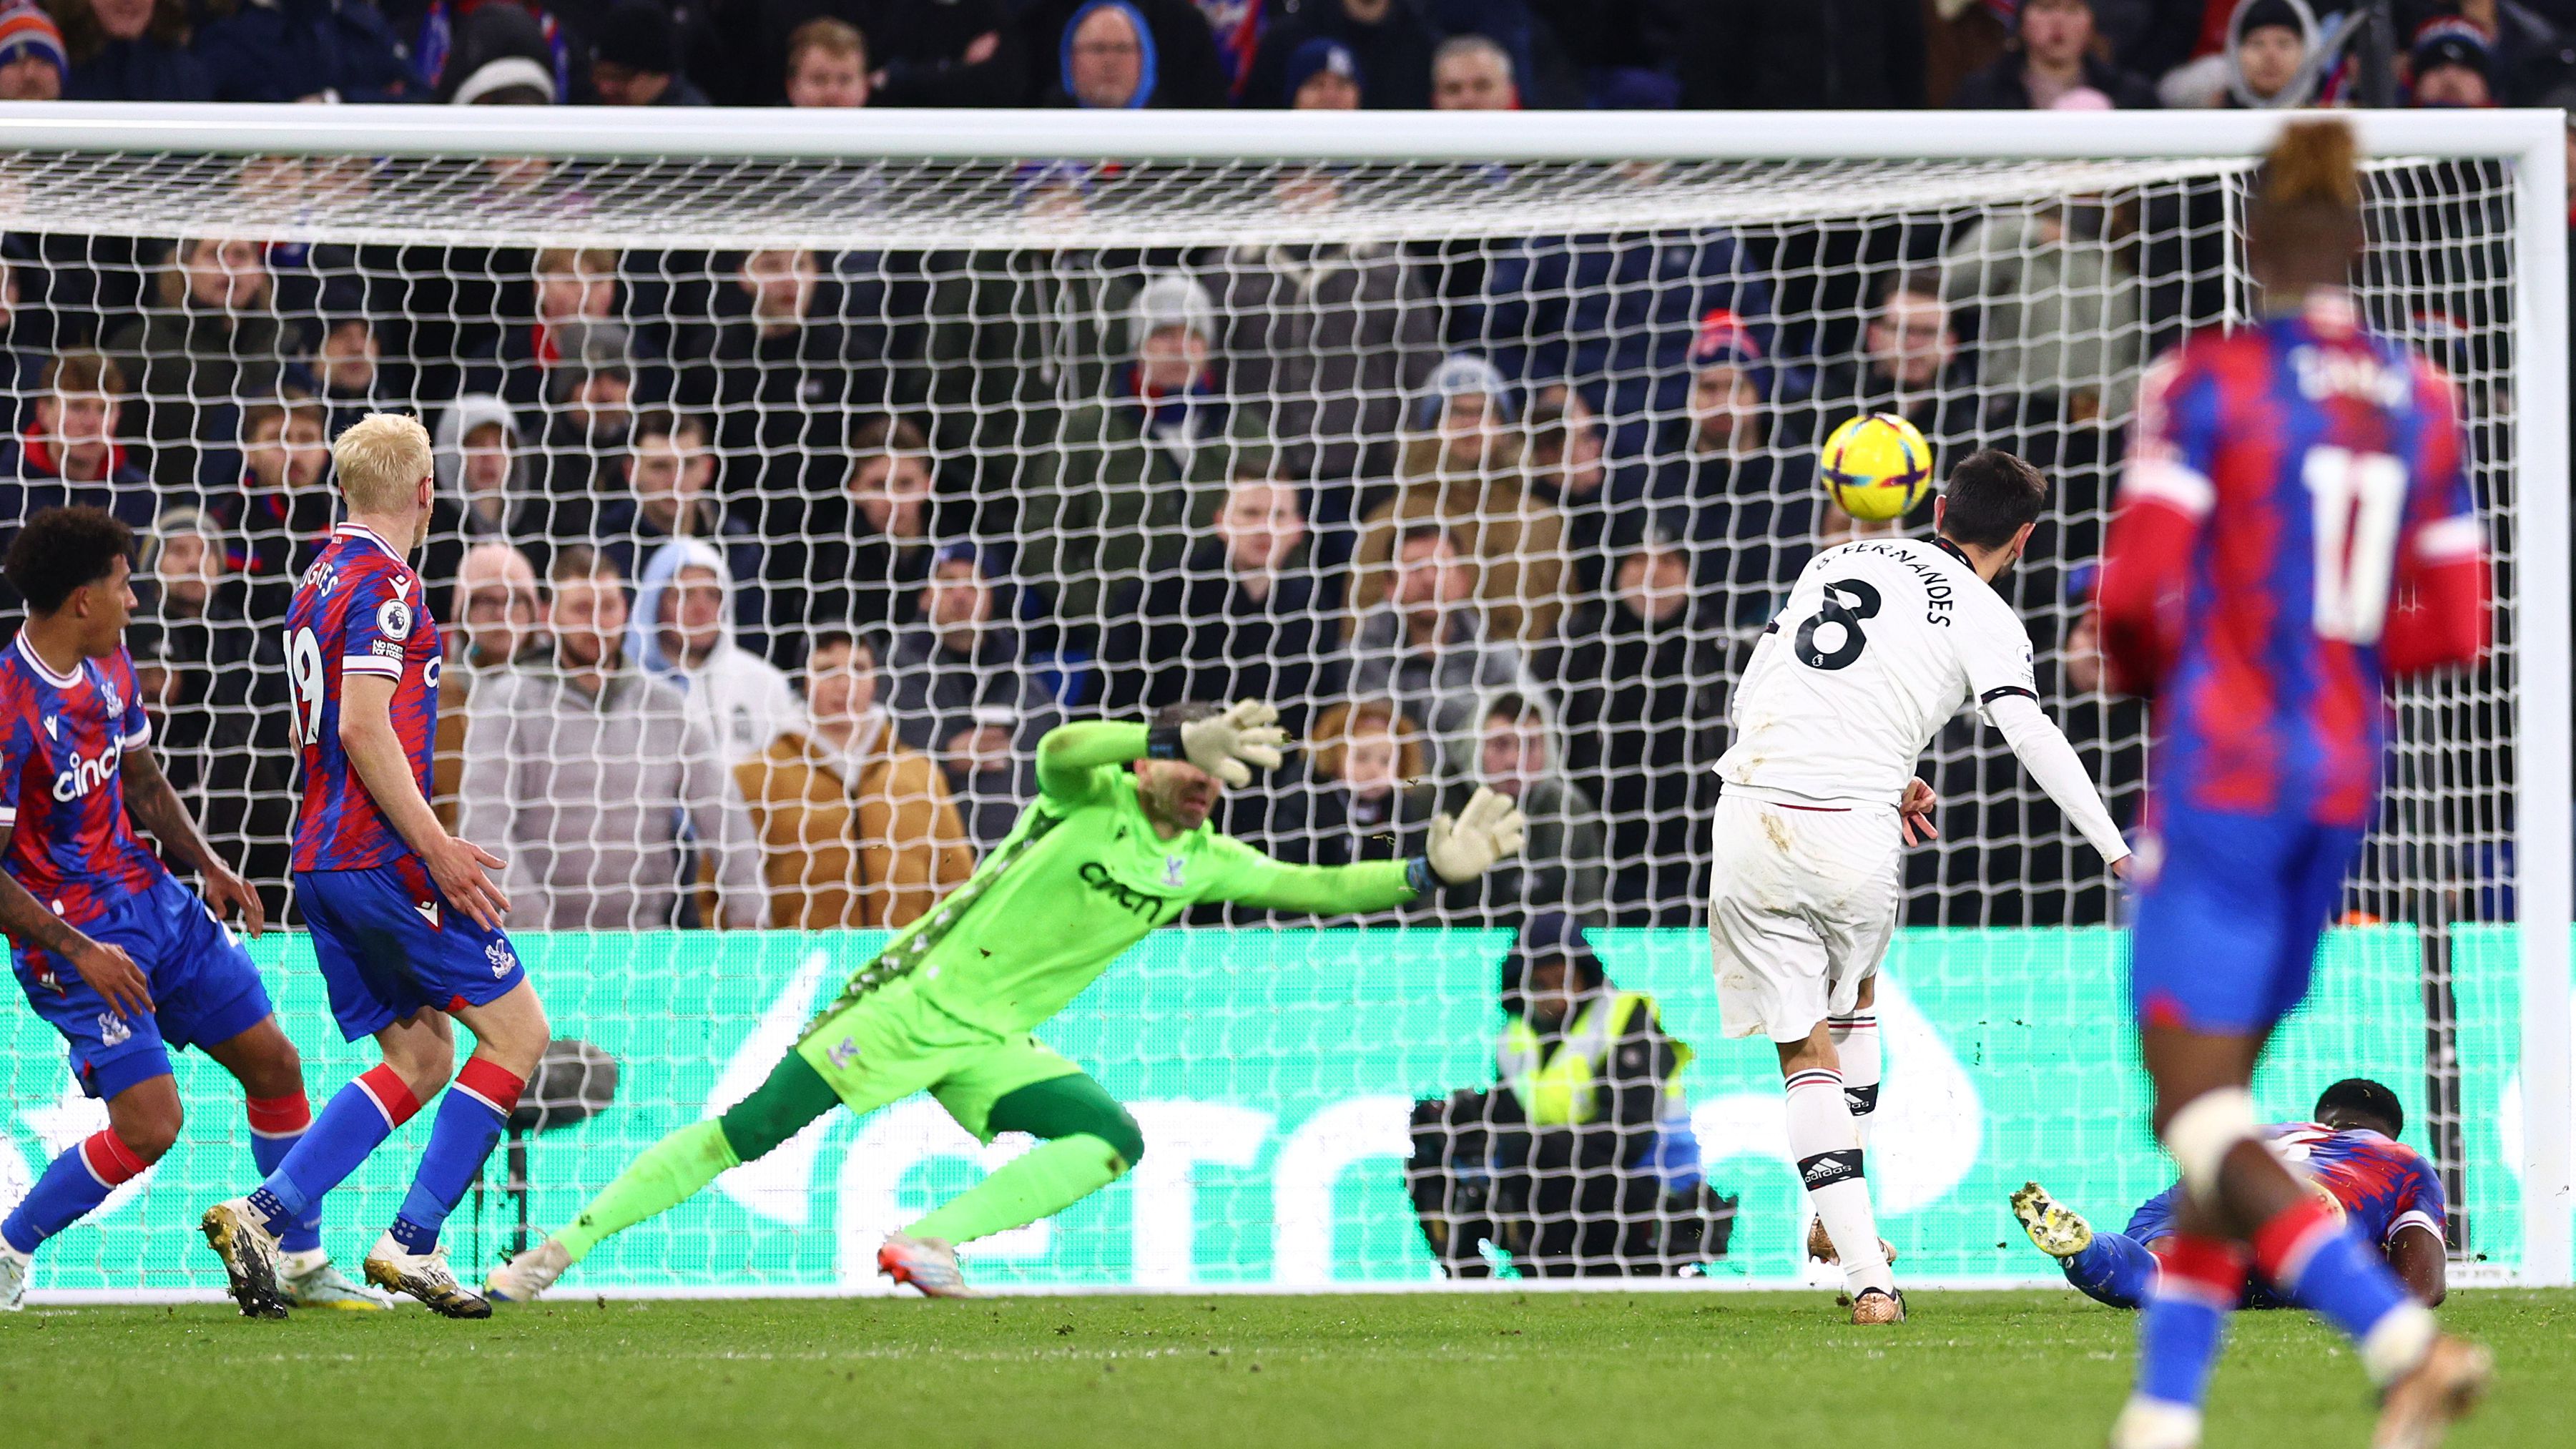 Momento do gol marcado por Bruno Fernandes (Crédito: Getty Images)